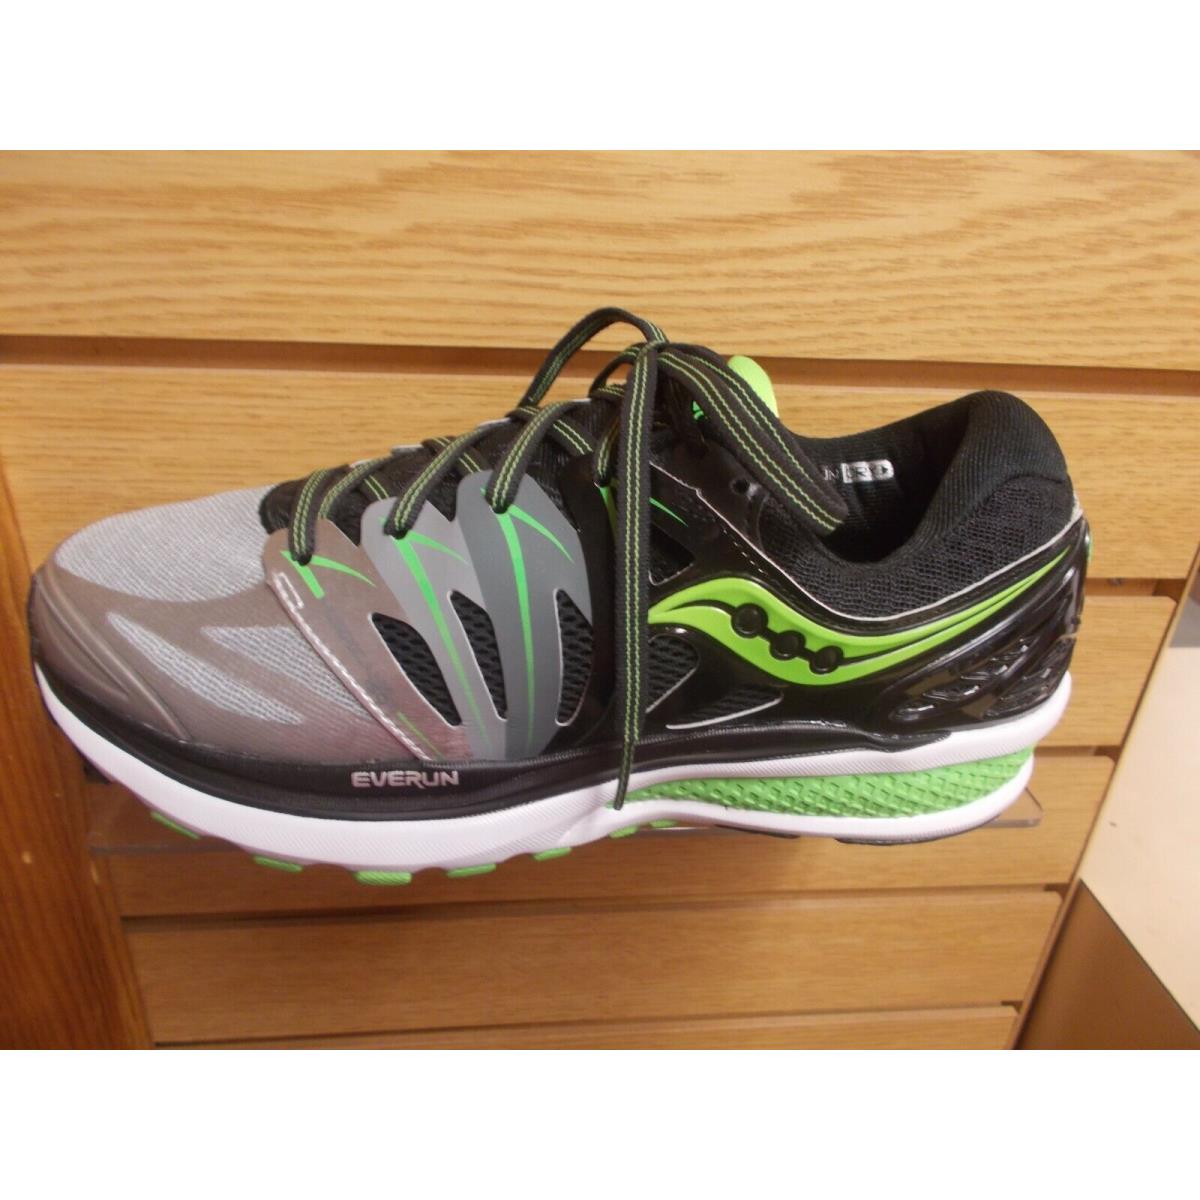 Saucony Hurricane ISO Men's Running Shoes Size 8 